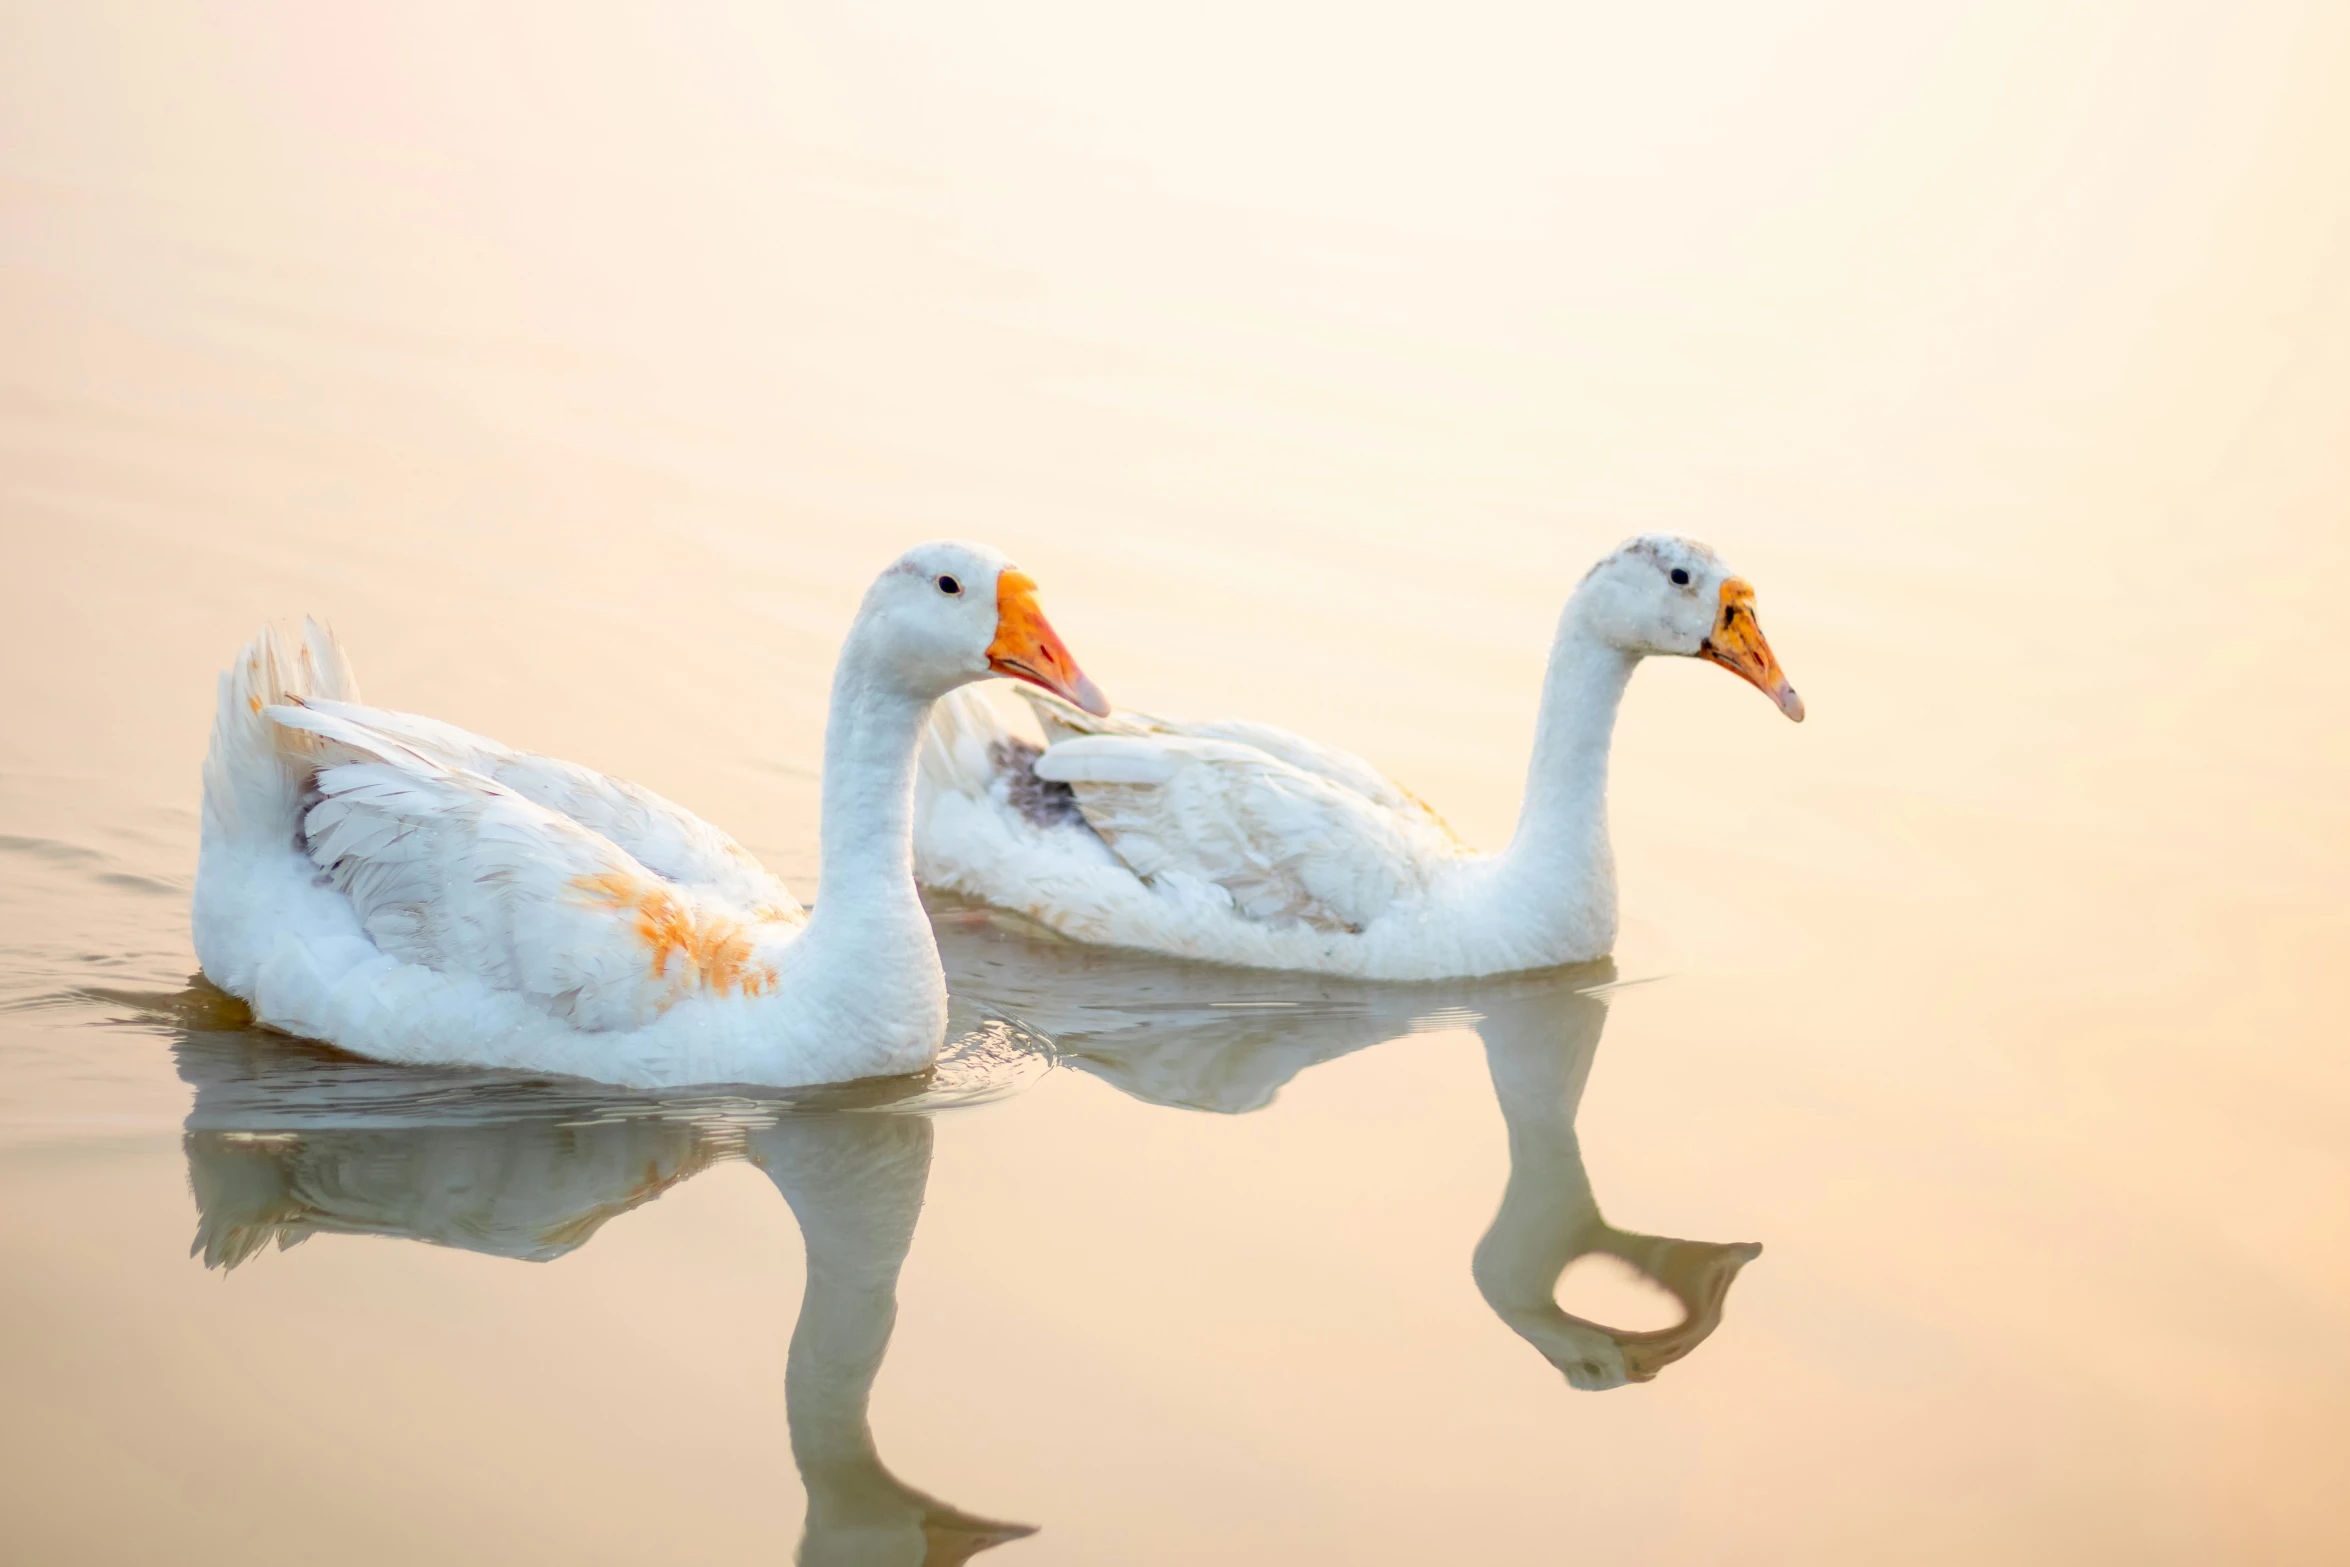 two ducks with orange beaks sitting in the water